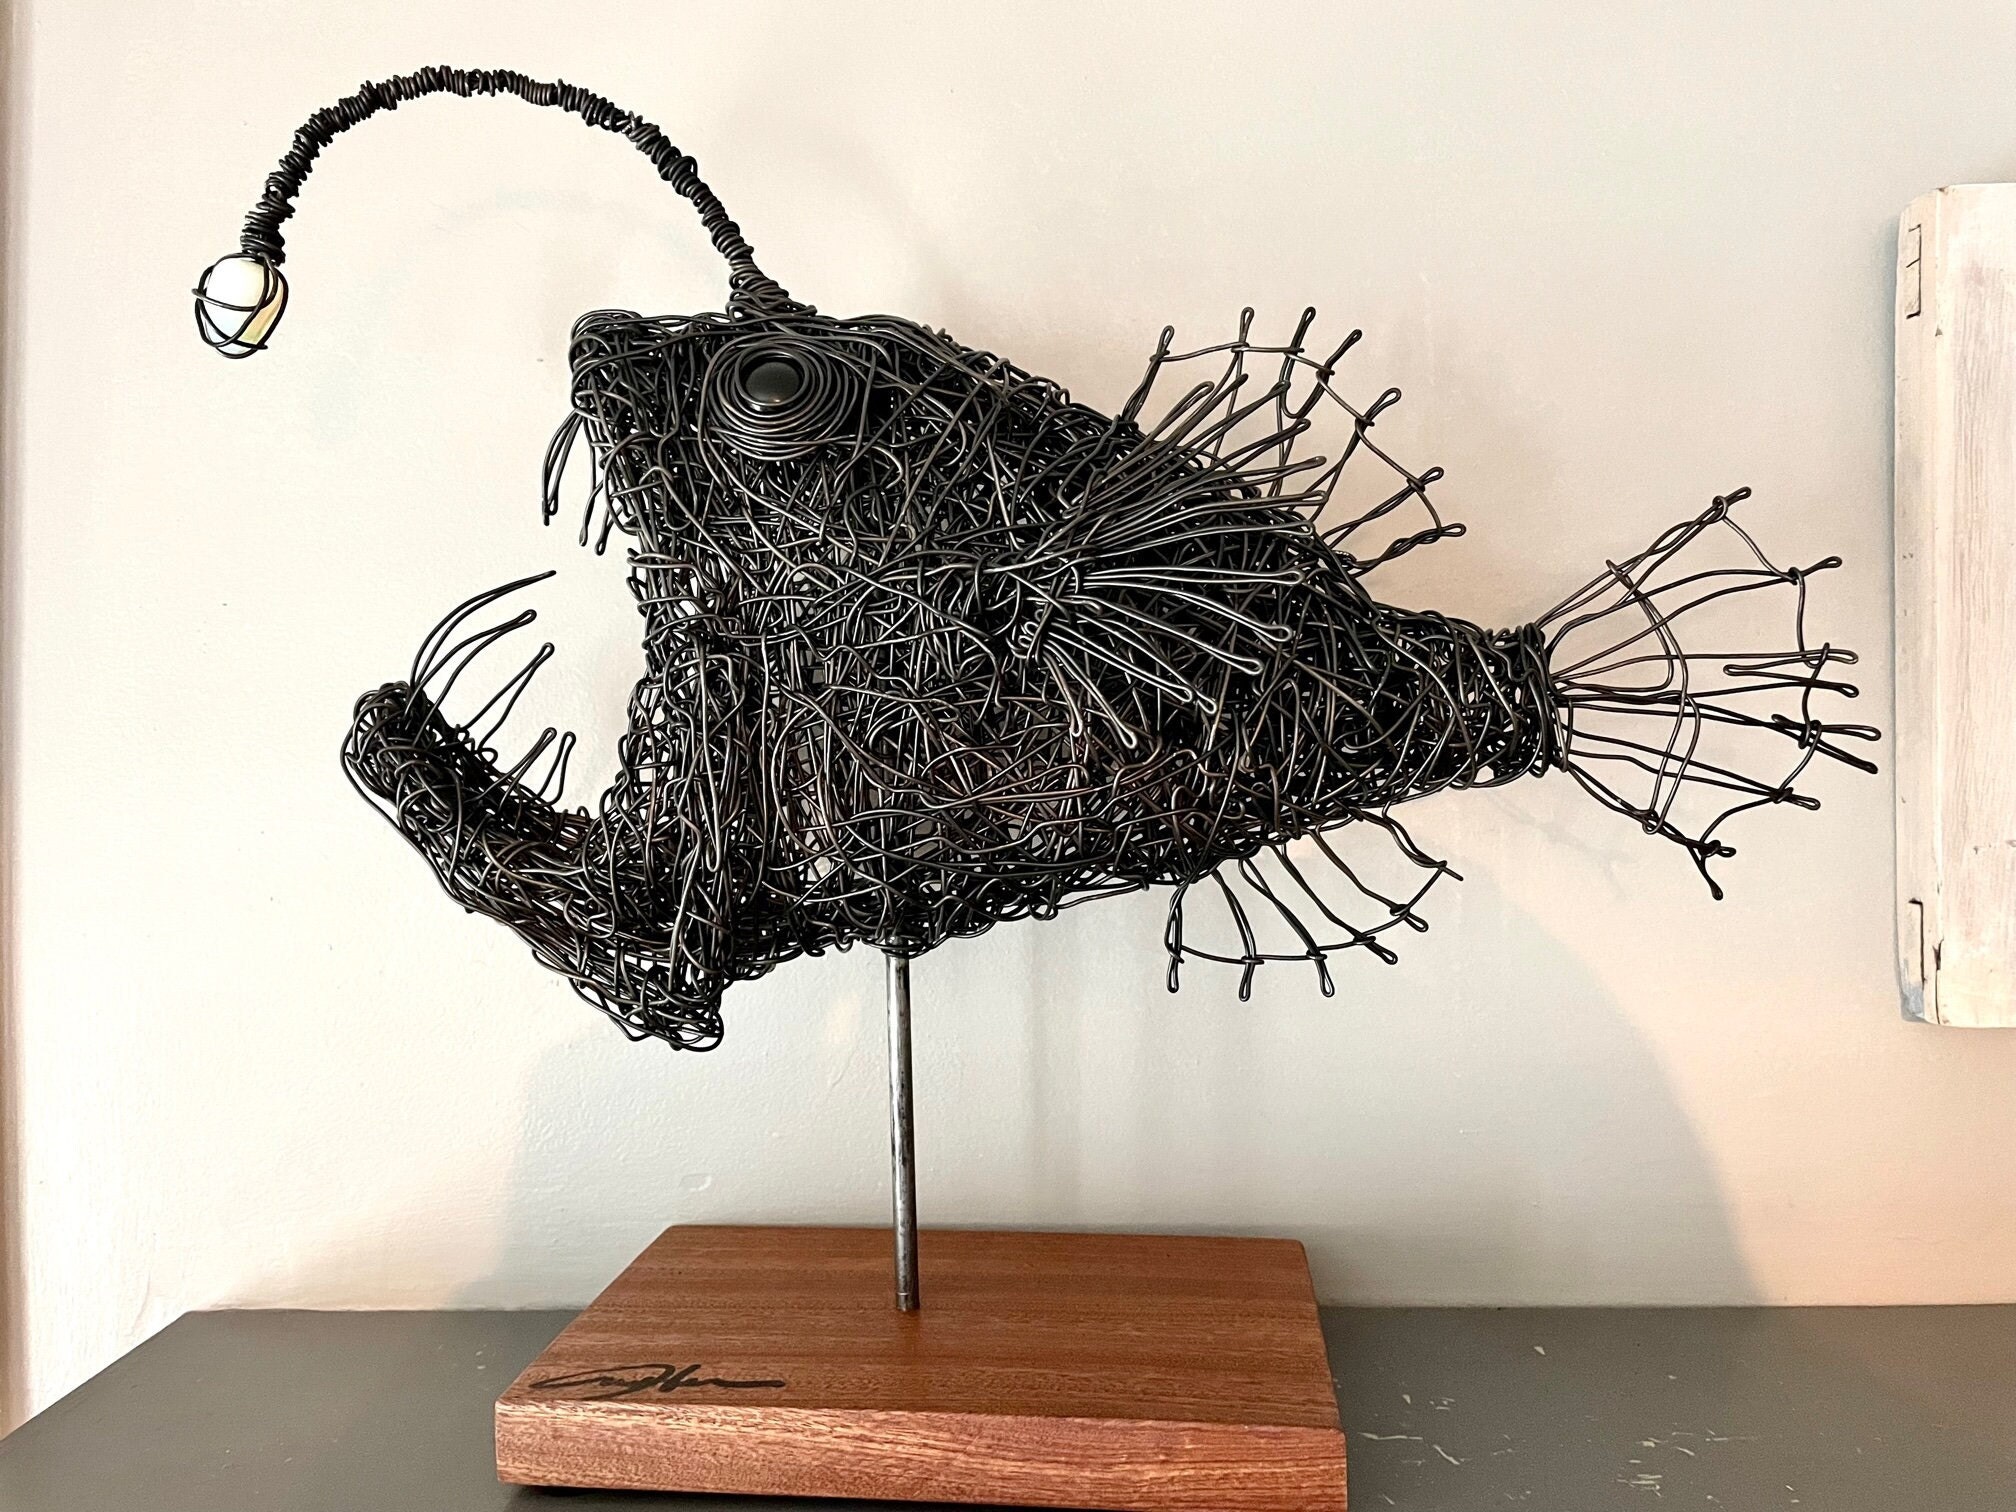 Original Handmade Wire Fish Sculpture. Wire Art, Wire Sculpture, Fish Art,  Angler Fish. Part of the Proceeds Benefit Save the Bay. 